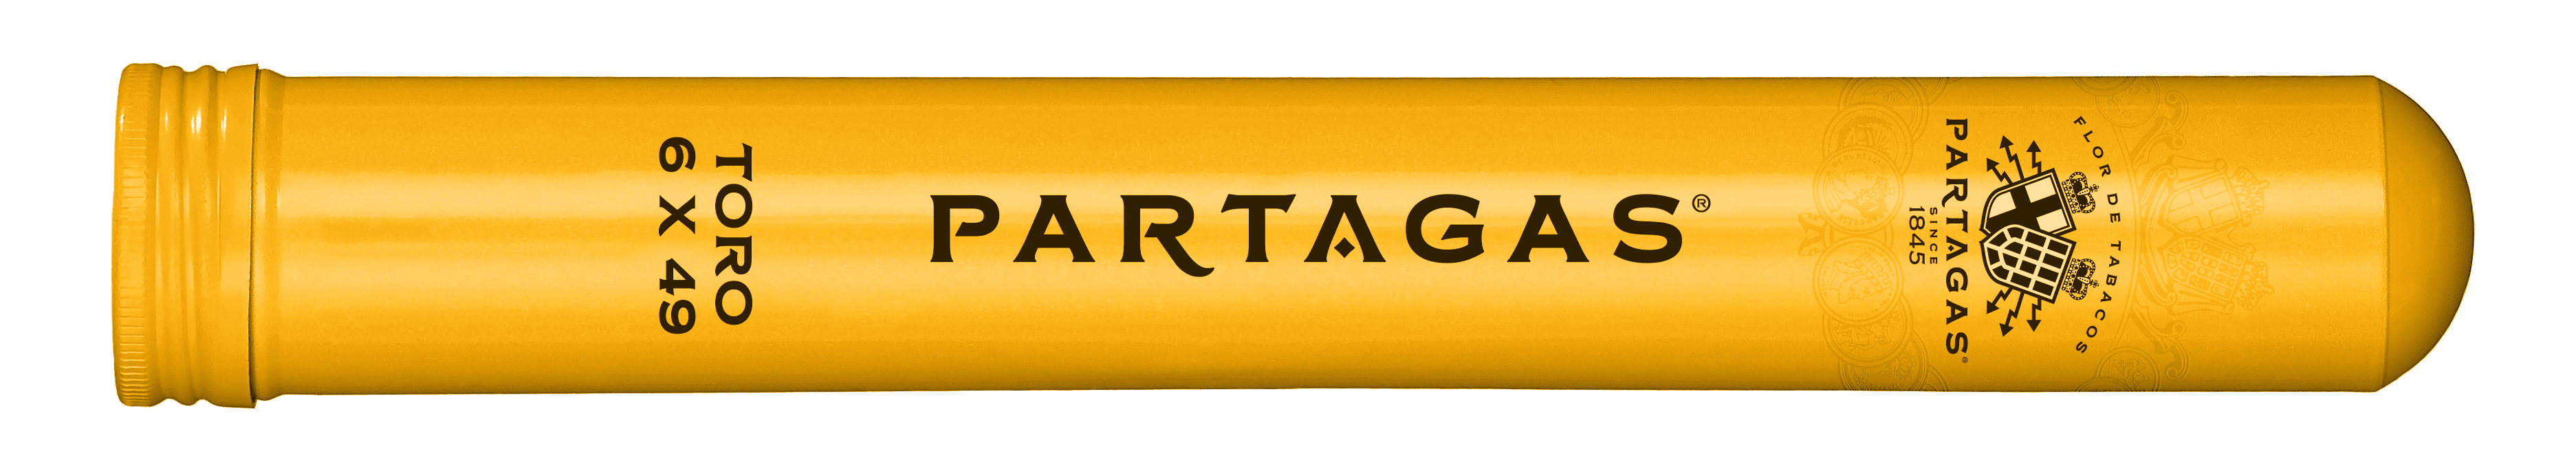 partagas-prepares-new-classic-toro-tubo-–-cigar-news